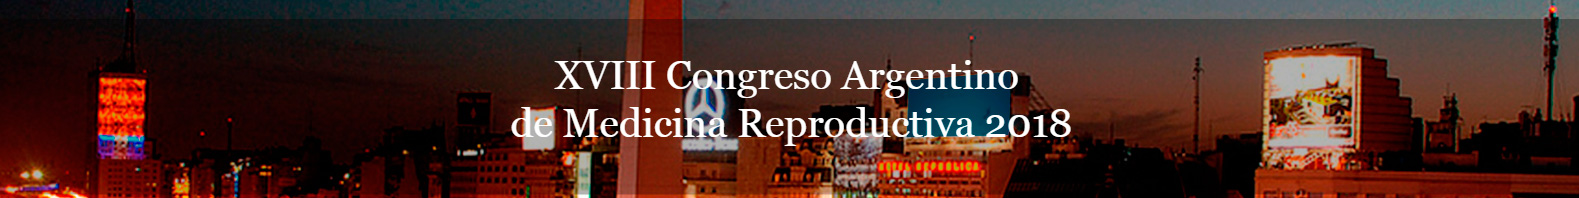 XVIII Congreso Argentino de Medicina Reproductiva 2018